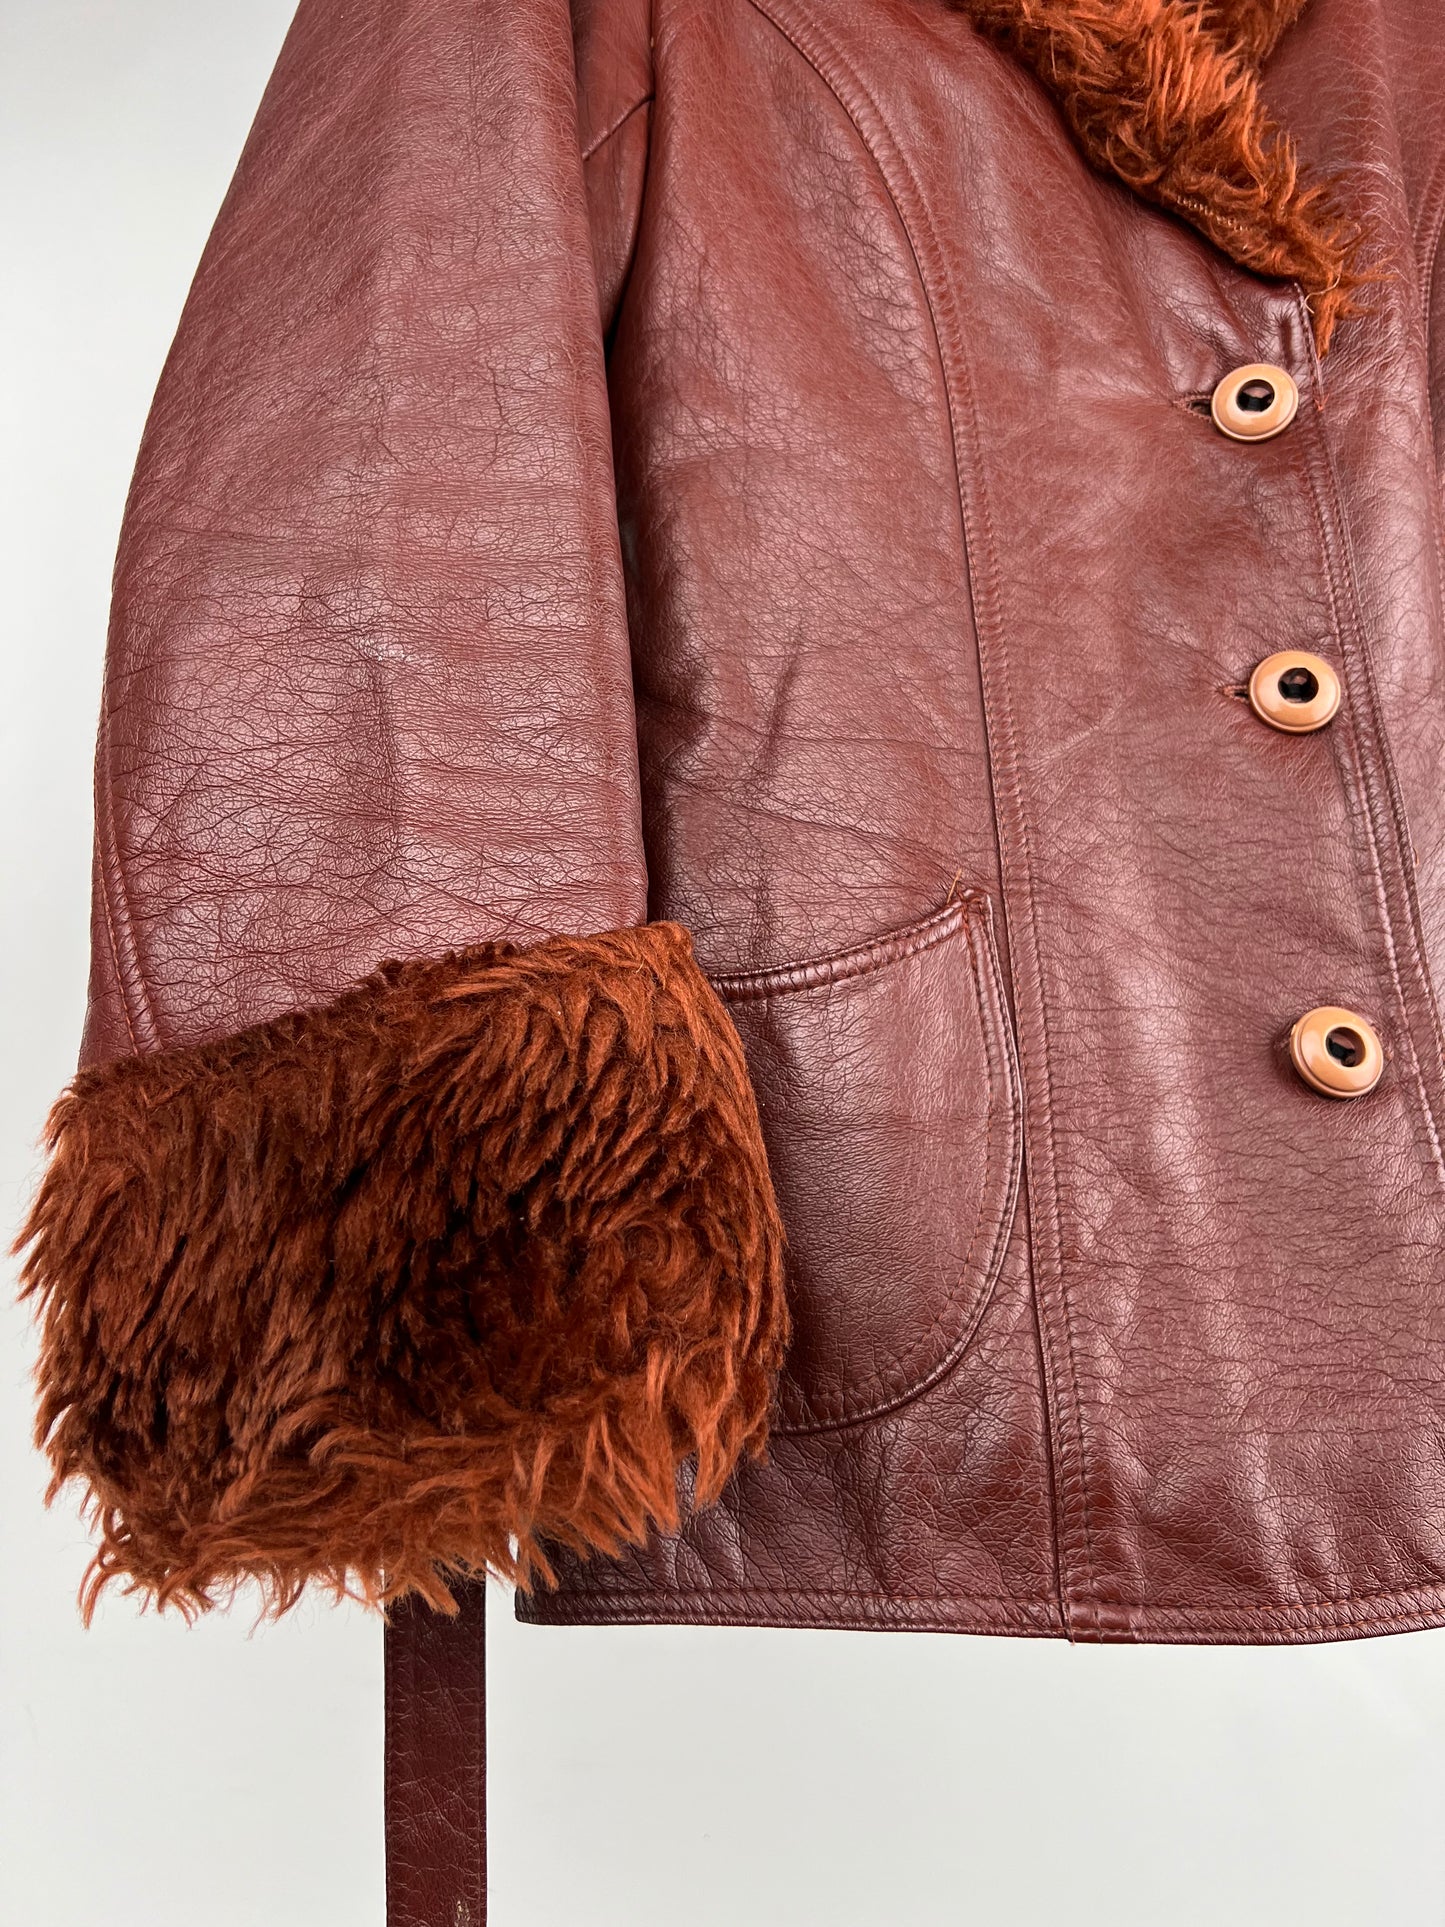 Vintage 70s Leather Afghan Coat